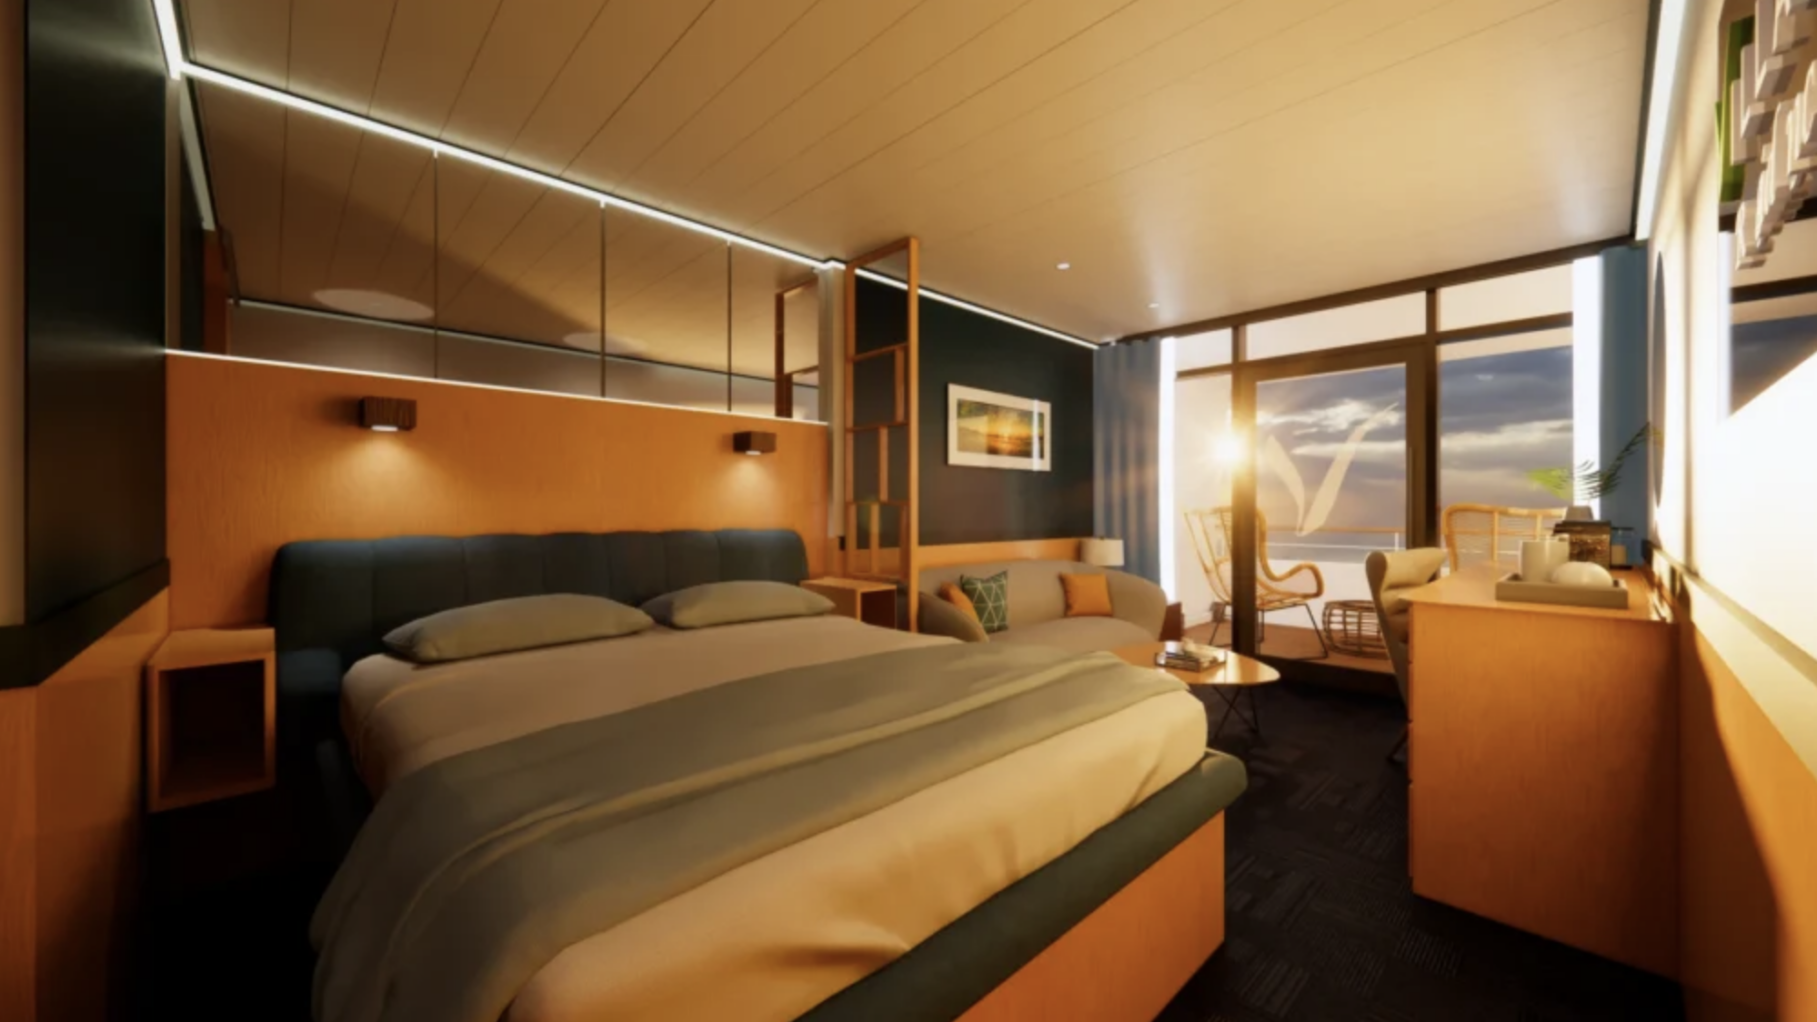 A balcony cabin onboard the new Villa Vie ship